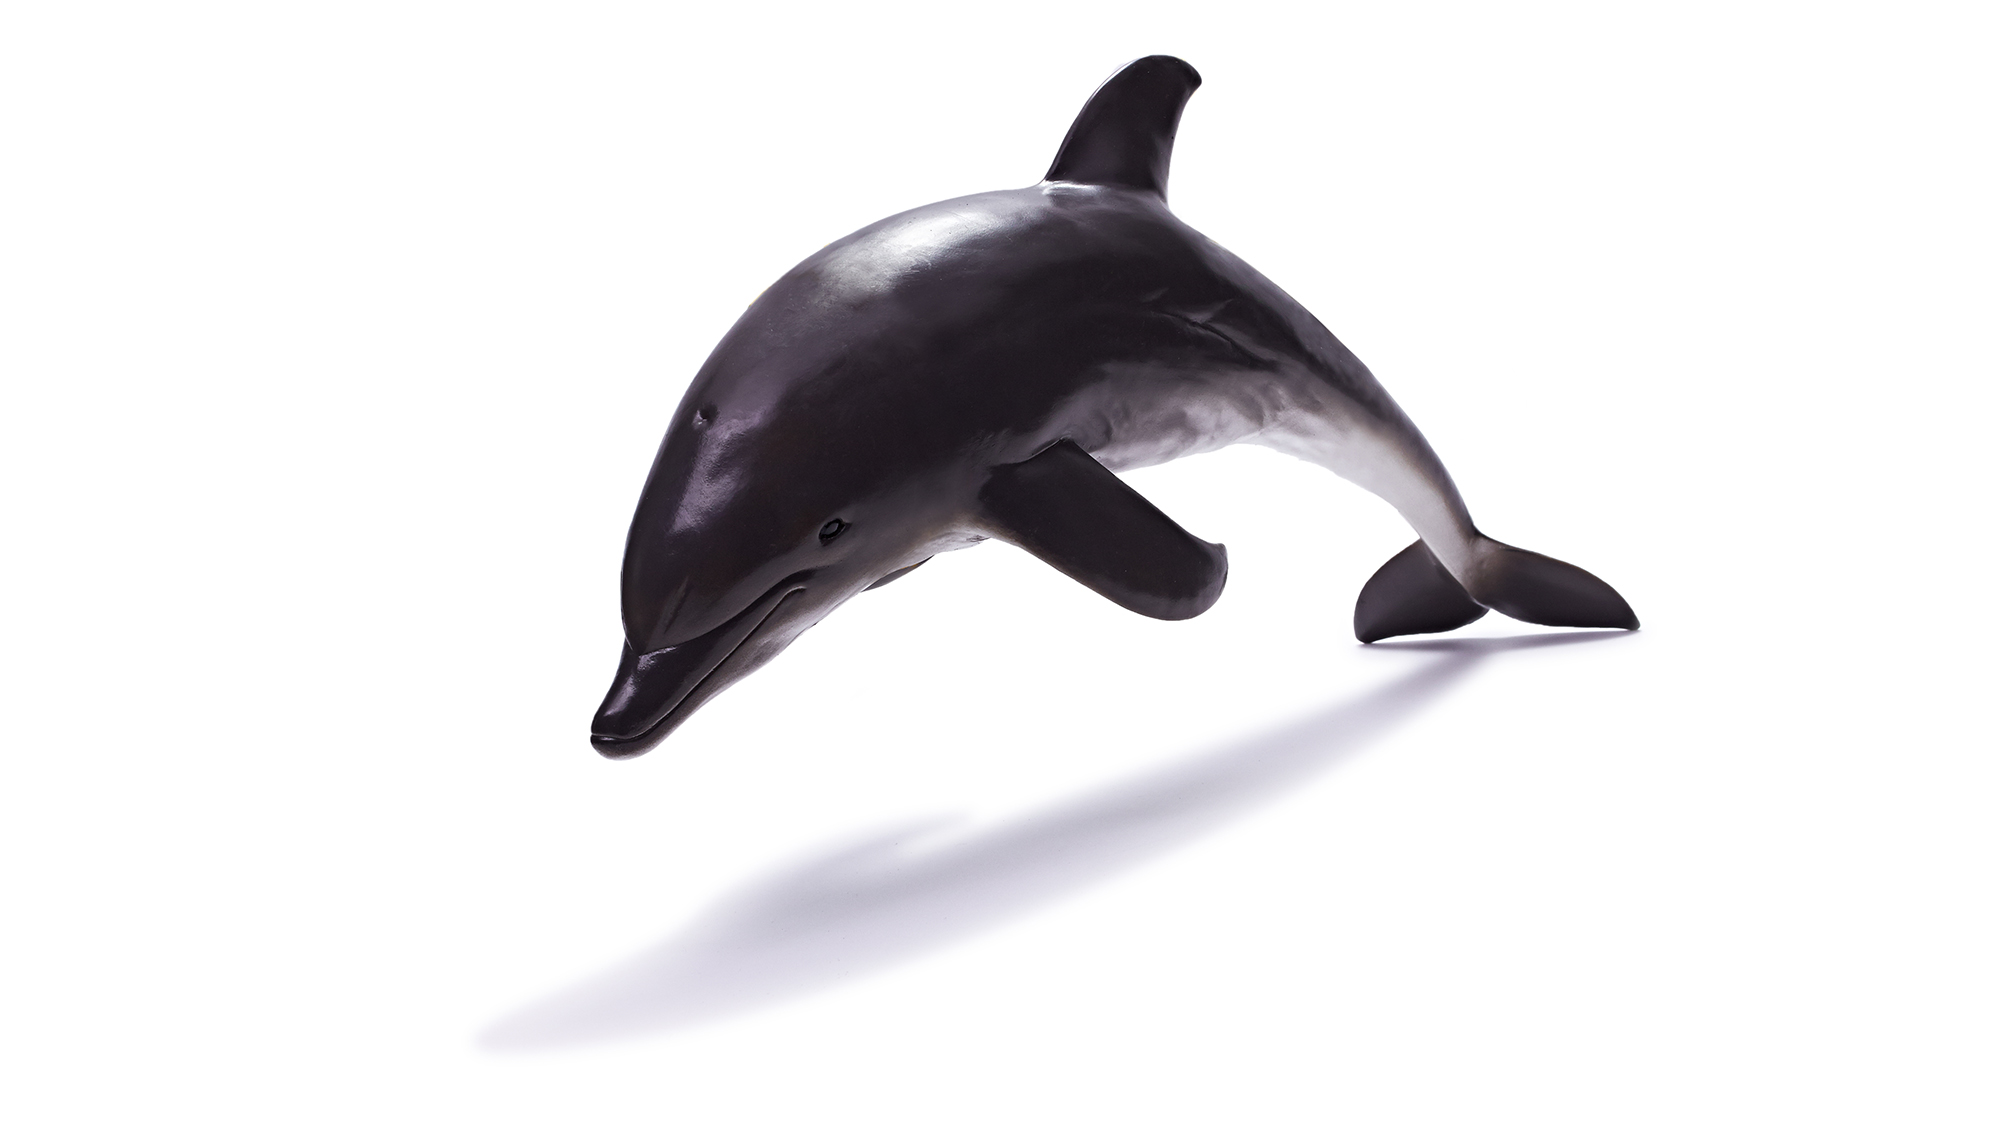 Marine Animal Toy - Delphinidaev Toy Model (Dolphin)